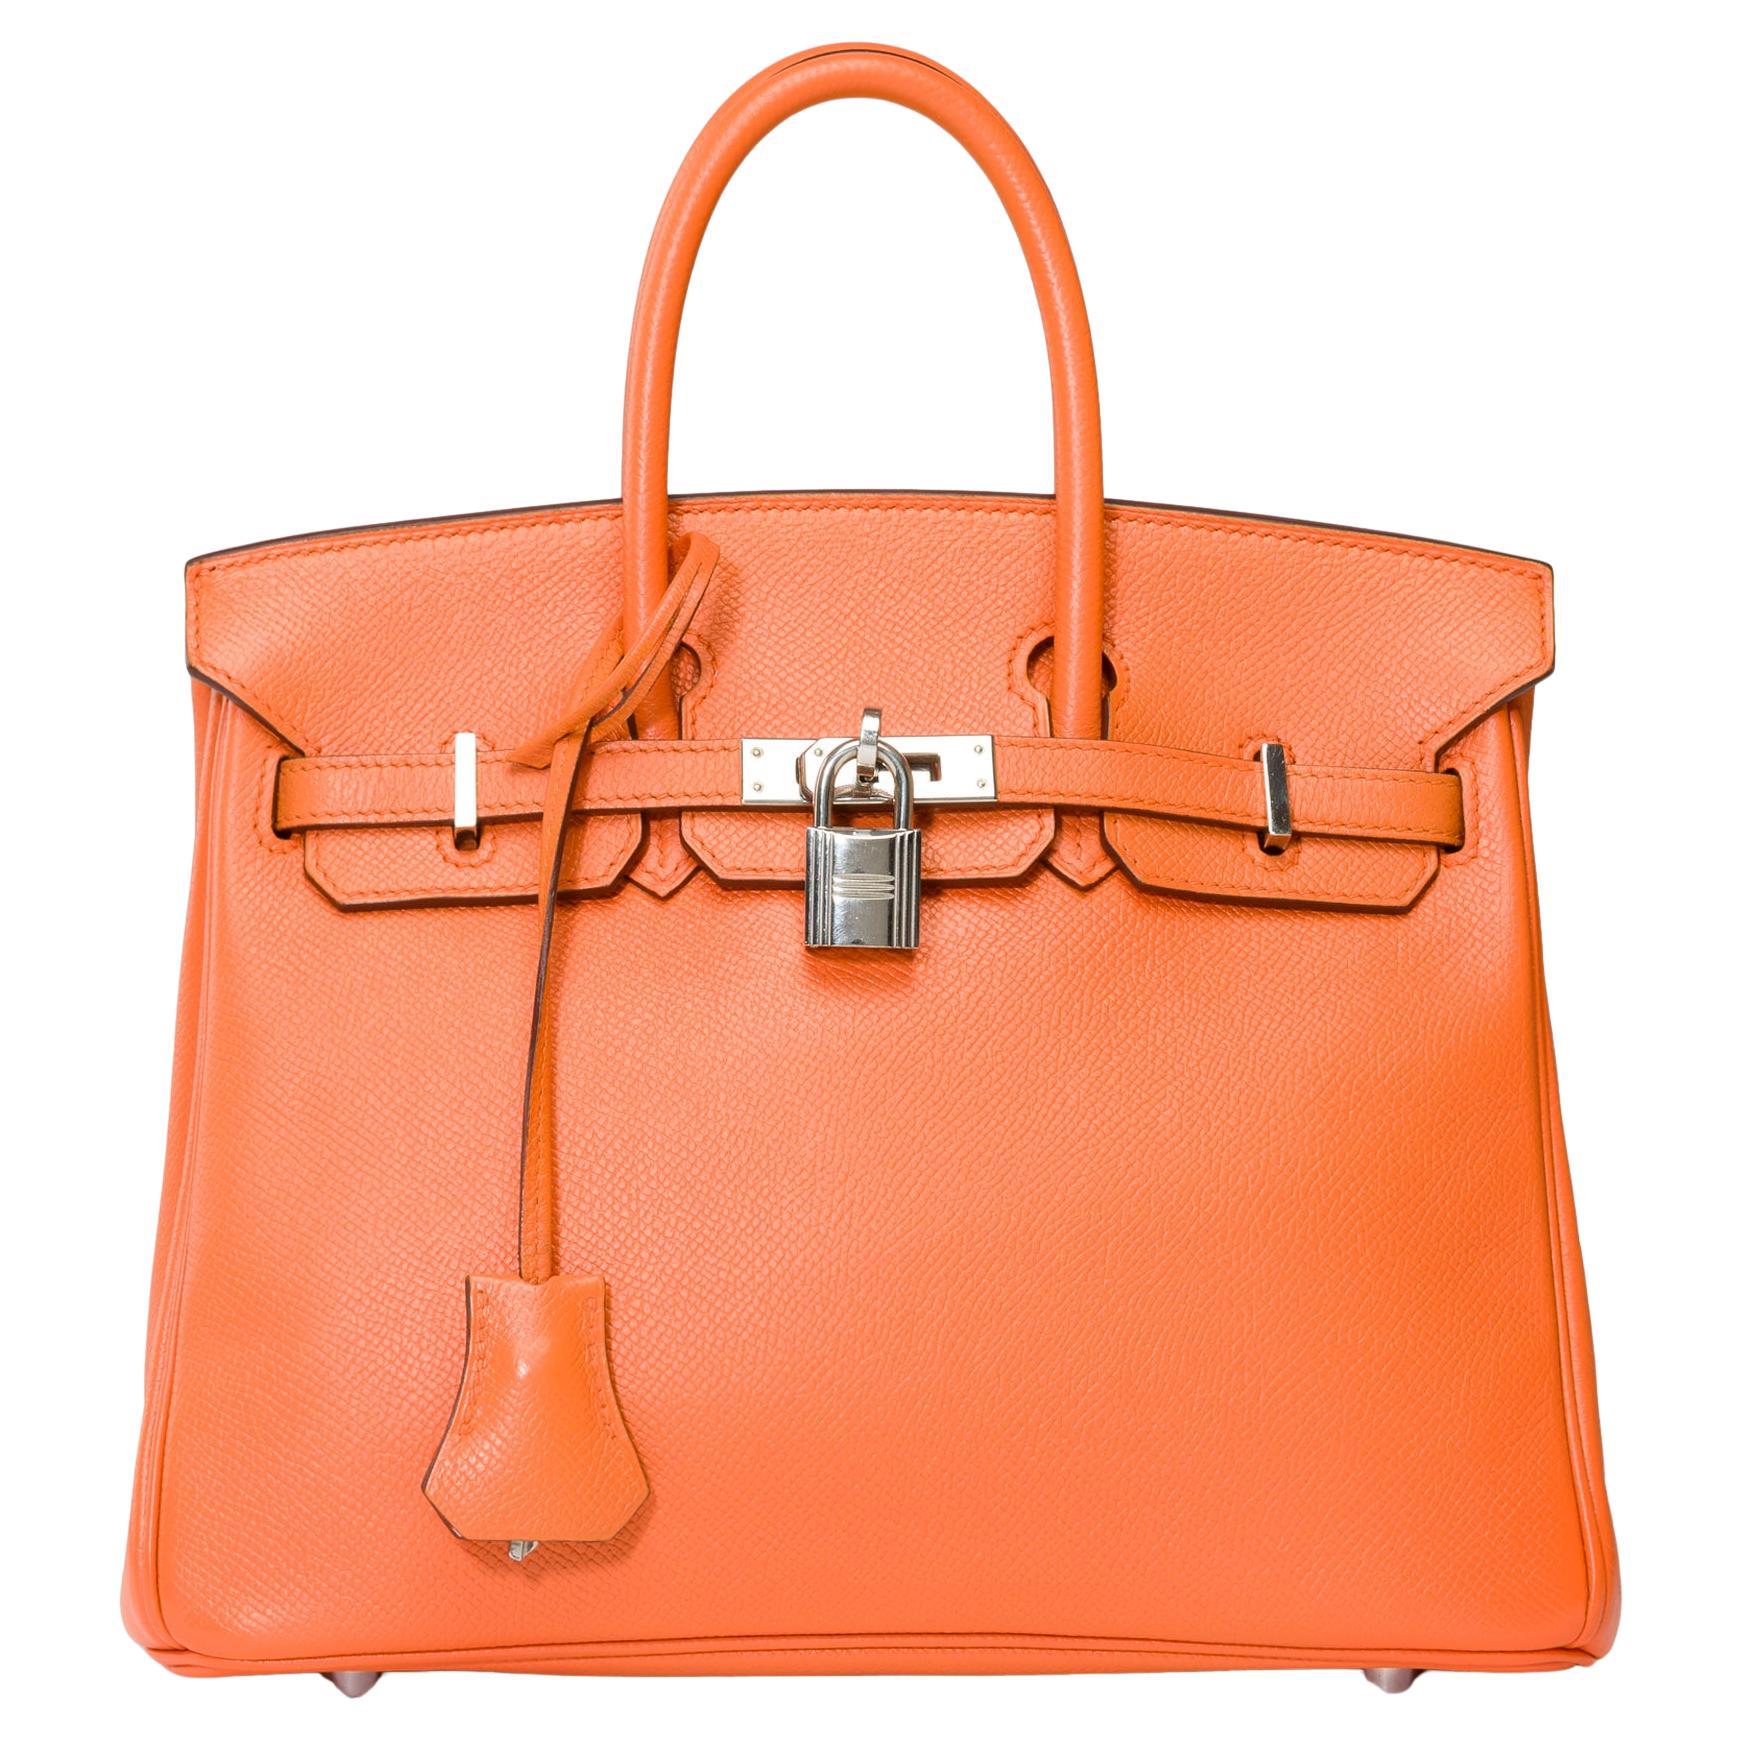 Bright Hermes Birkin 25cm handbag in Orange Epsom calf leather, SHW